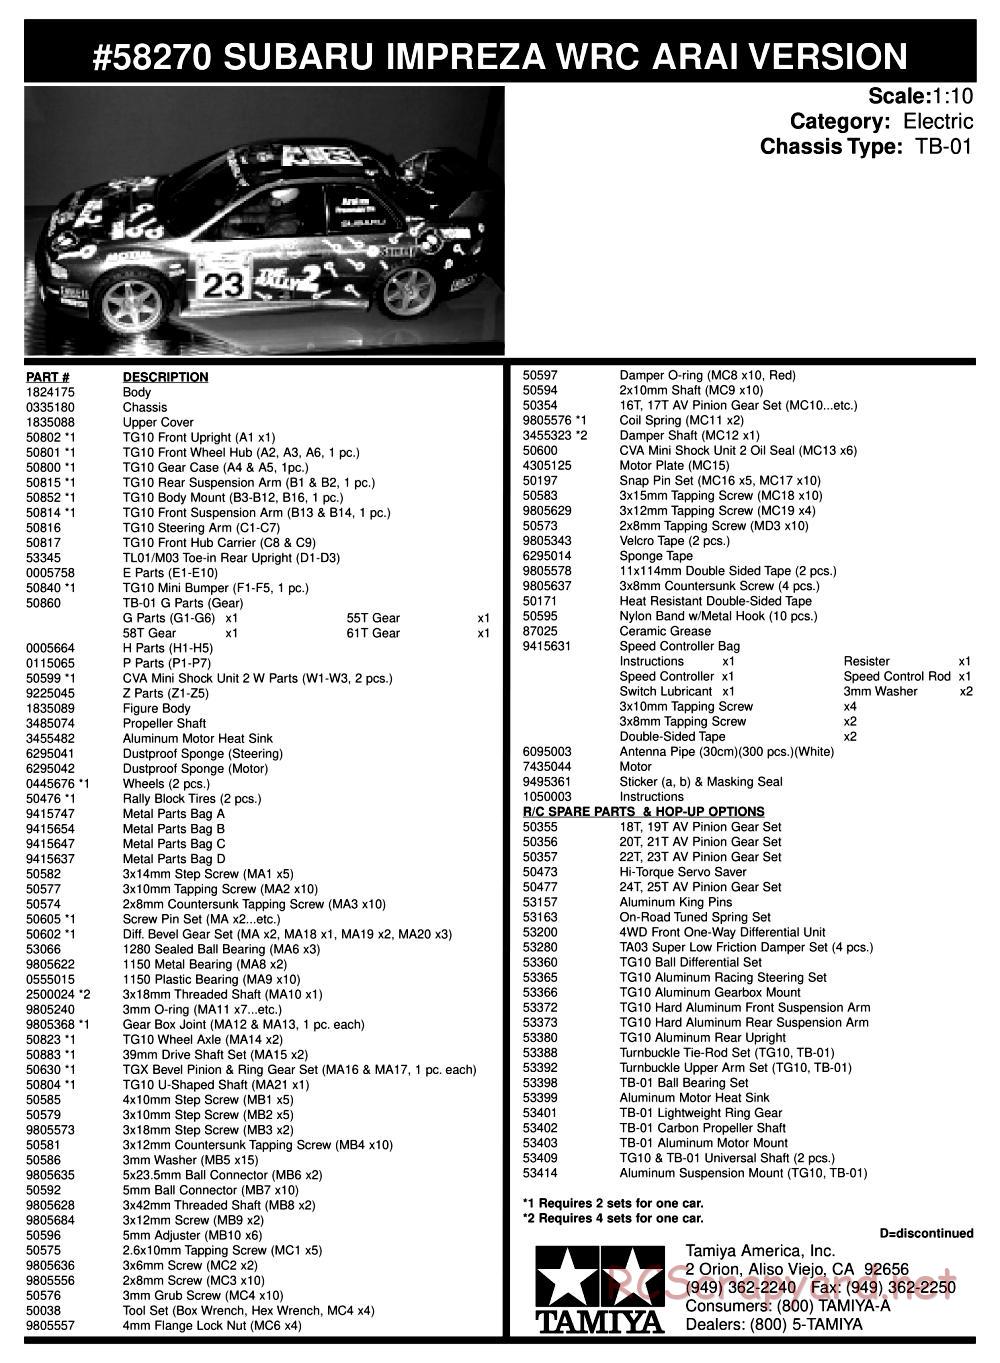 Tamiya - Subaru Impreza WRC Arai Version - TB-01 Chassis - Parts List - Page 1